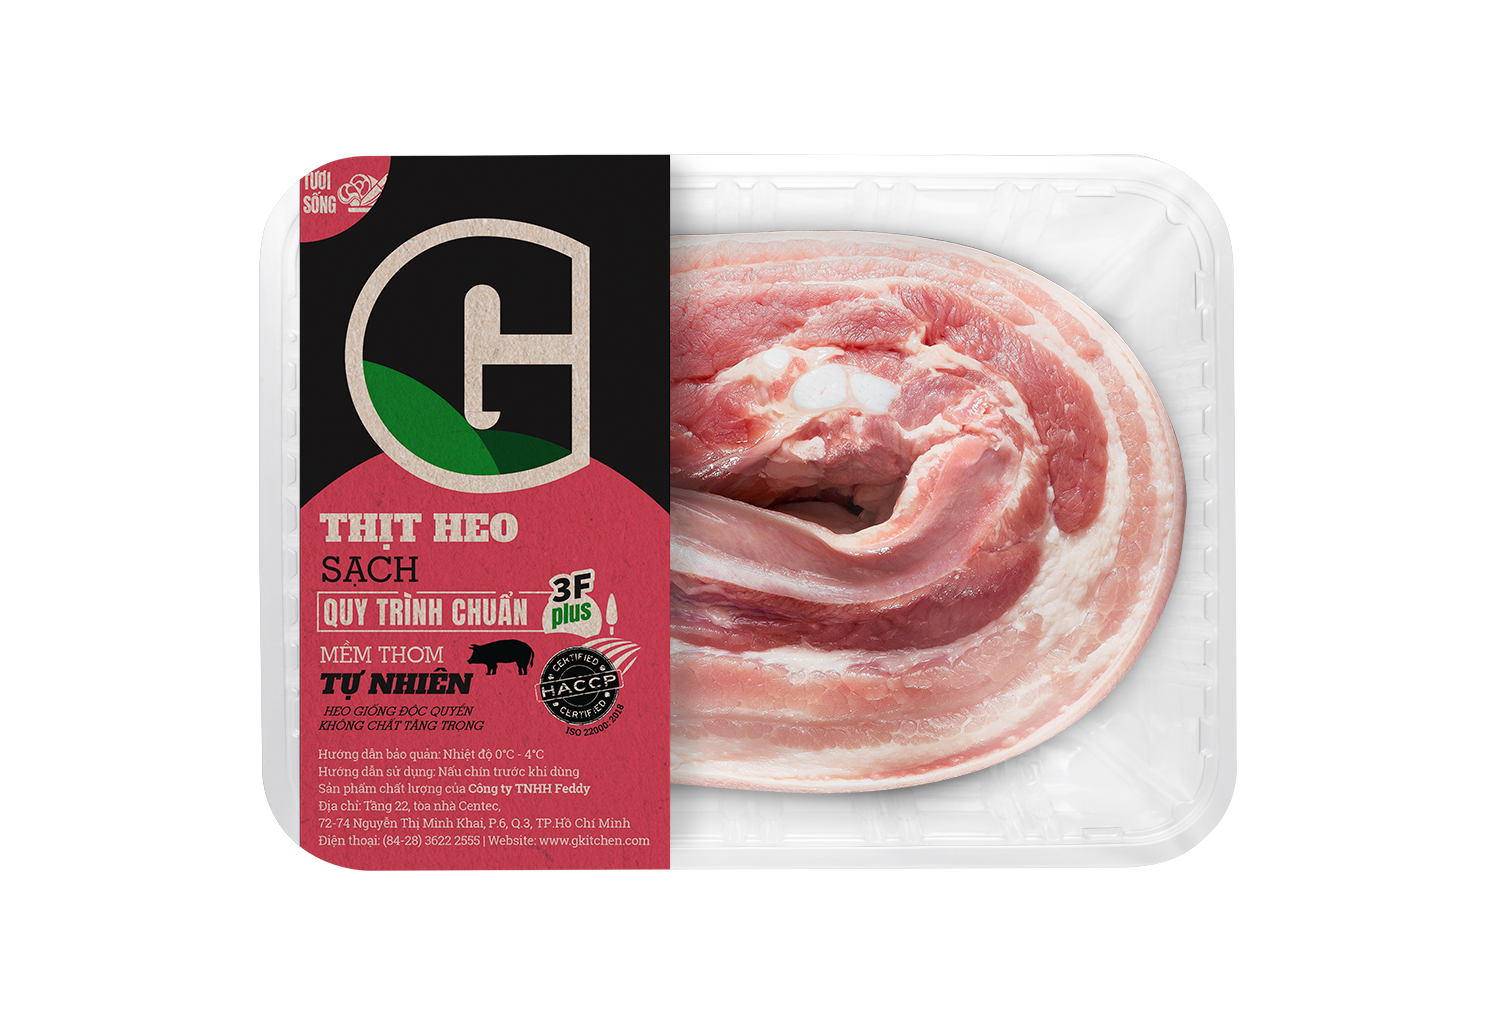 G Pork Belly no ribs (300g)